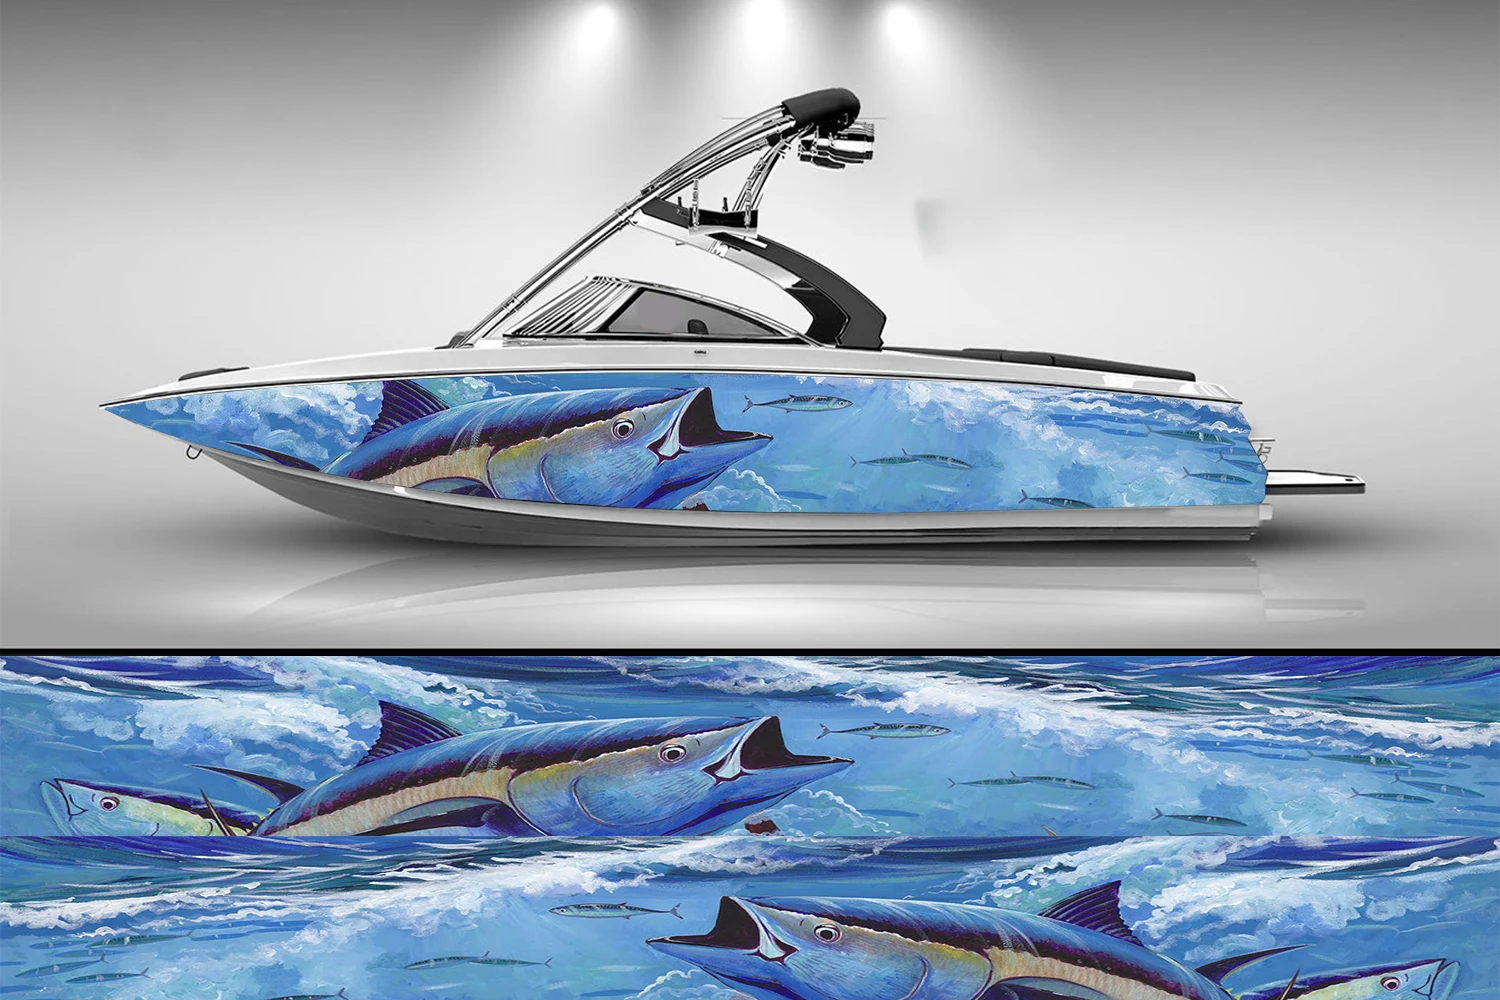 наклейка на лодку marlin, модная изготовленная на заказ наклейка на рыбную лодку, виниловая водонепроницаемая наклейка на лодку, графическая наклейка на лодку